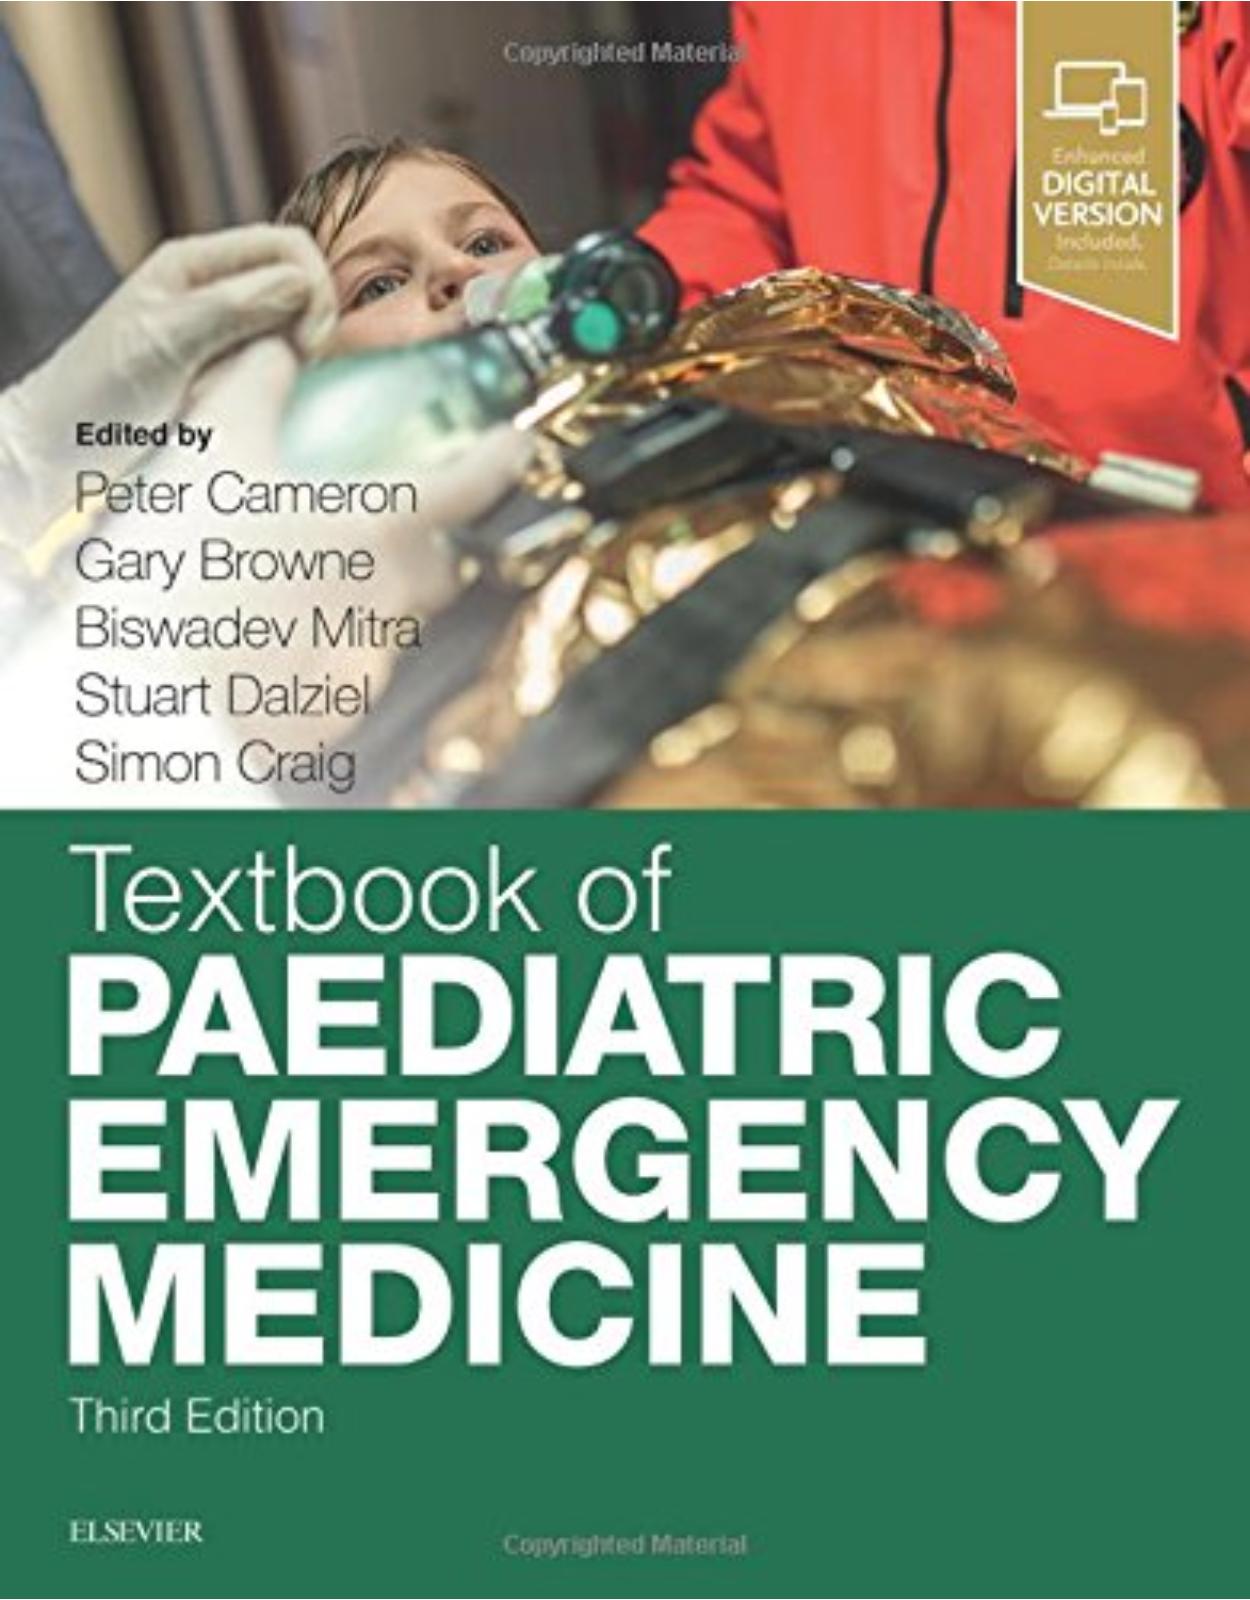 Textbook of Paediatric Emergency Medicine, 3e